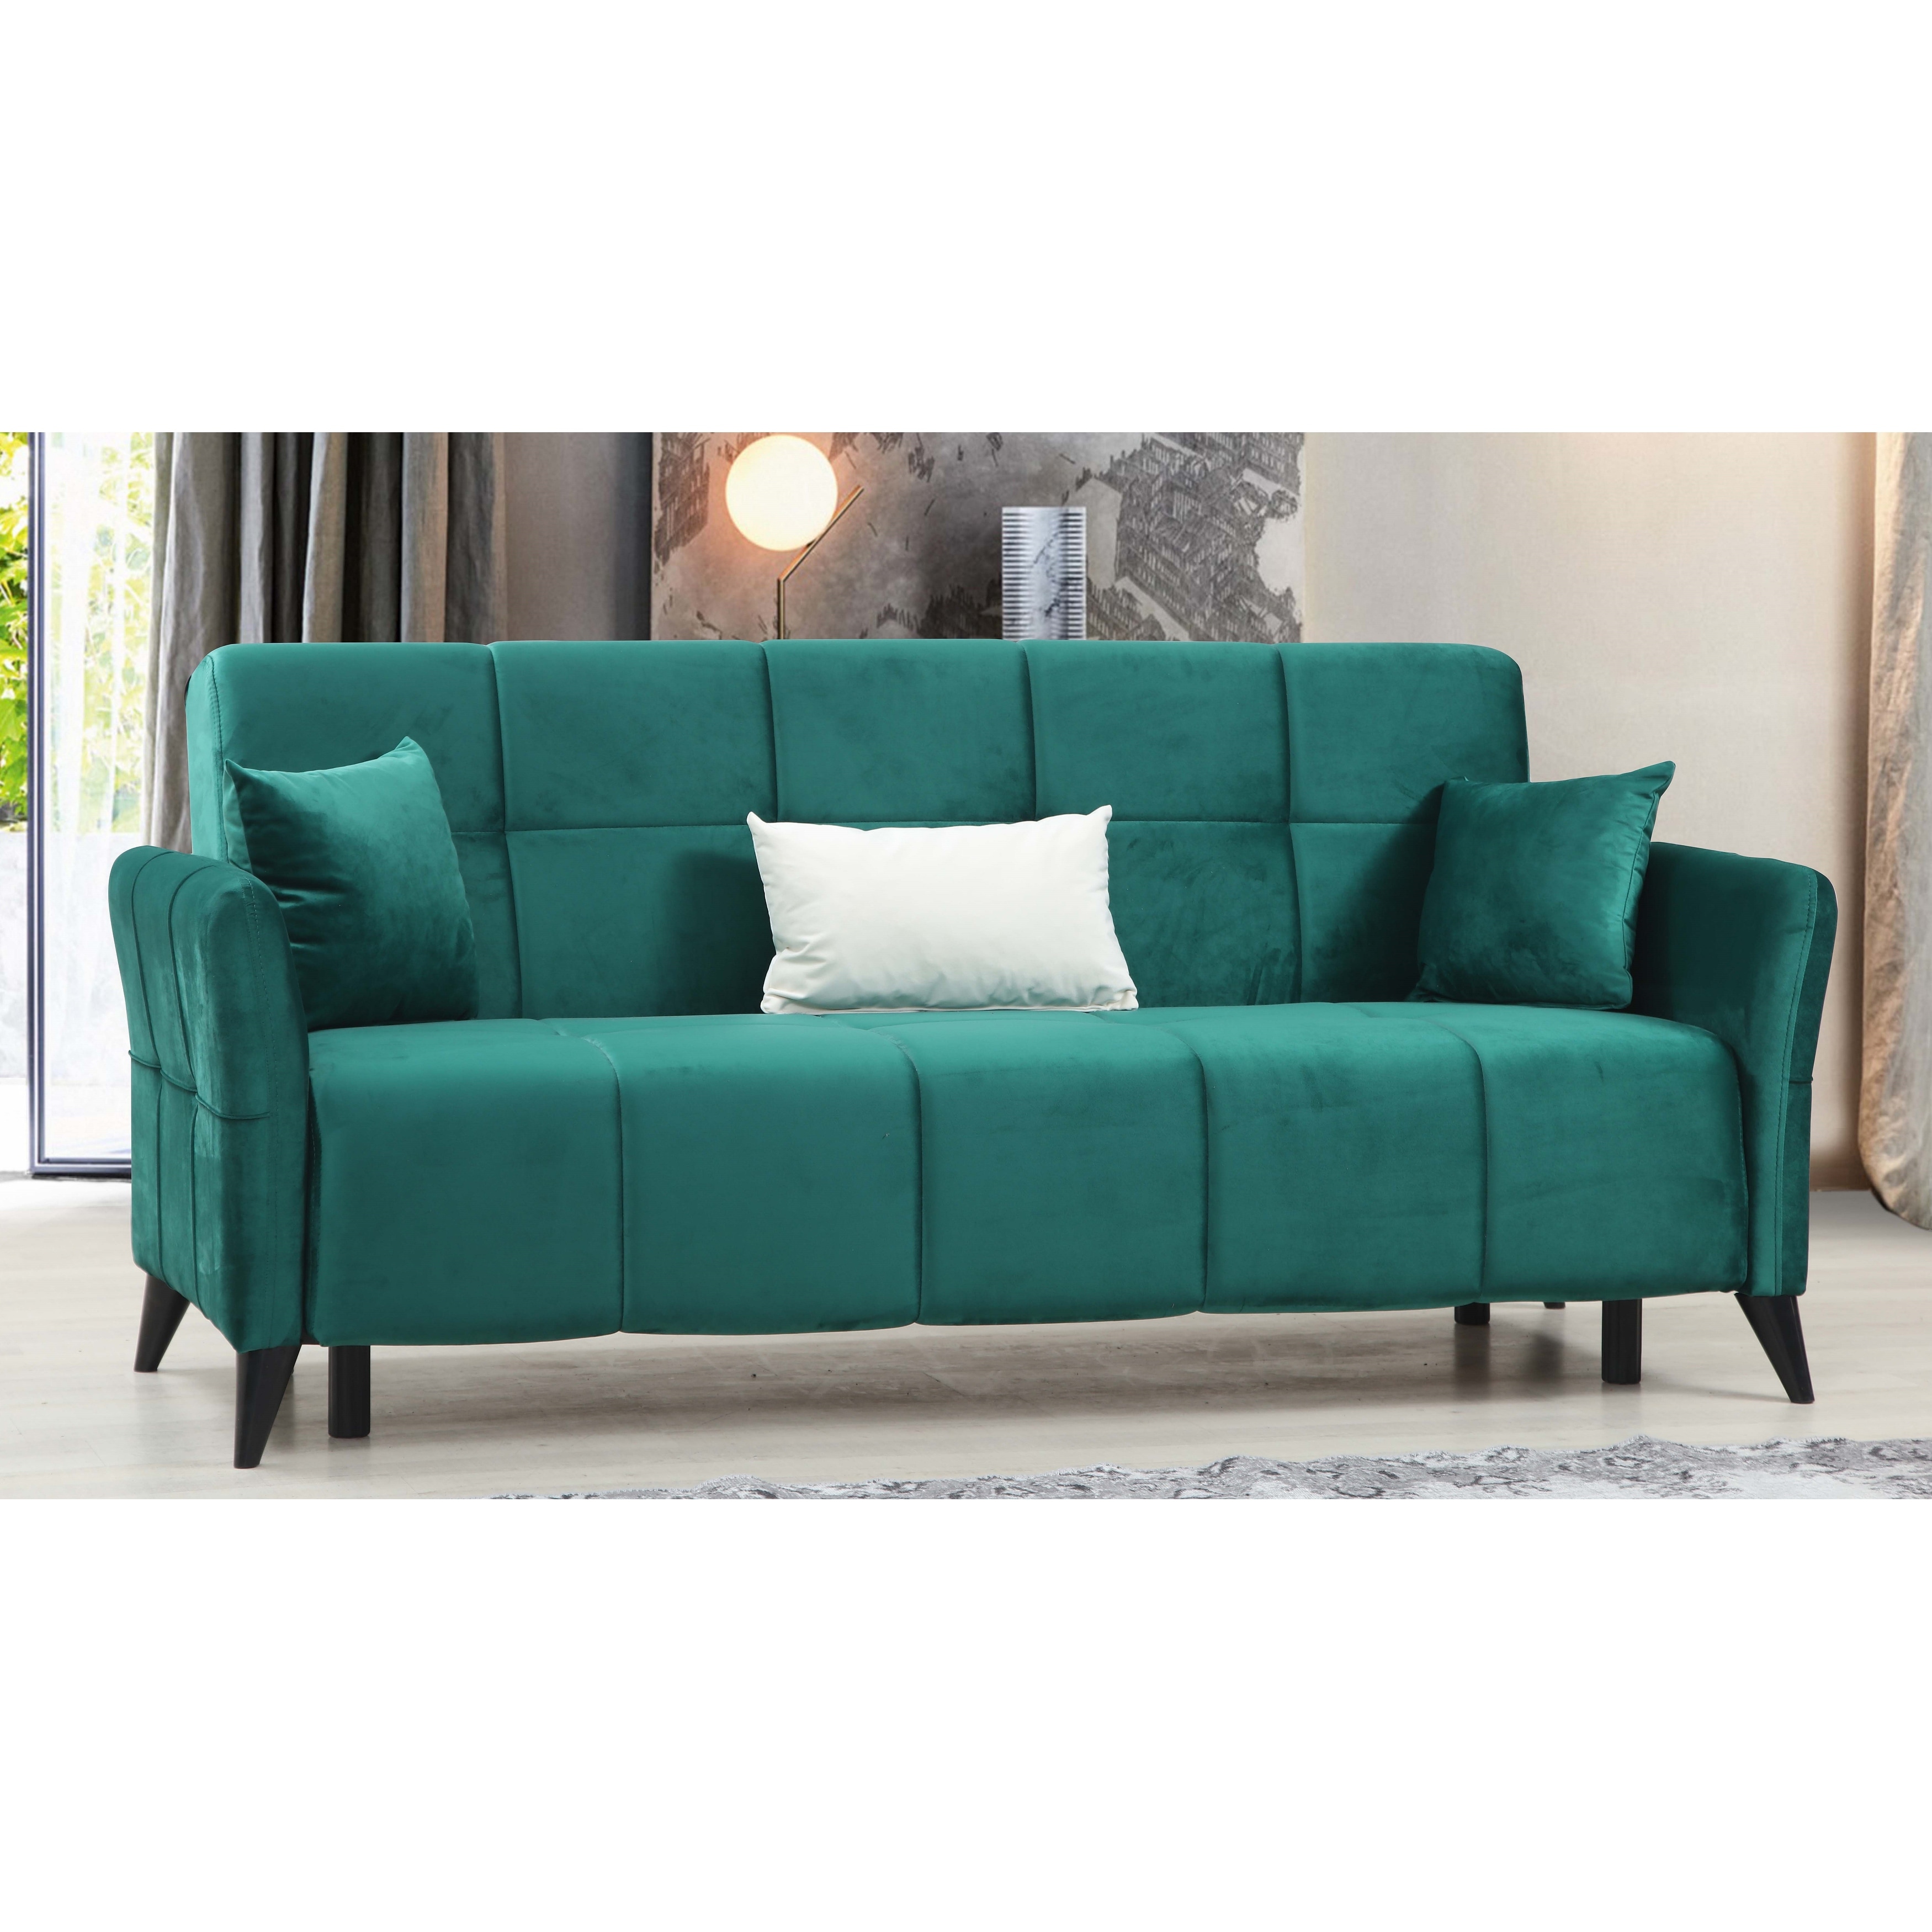 Armandale Green Velvet Upholstered Convertible Sleeper Sofa with Storage